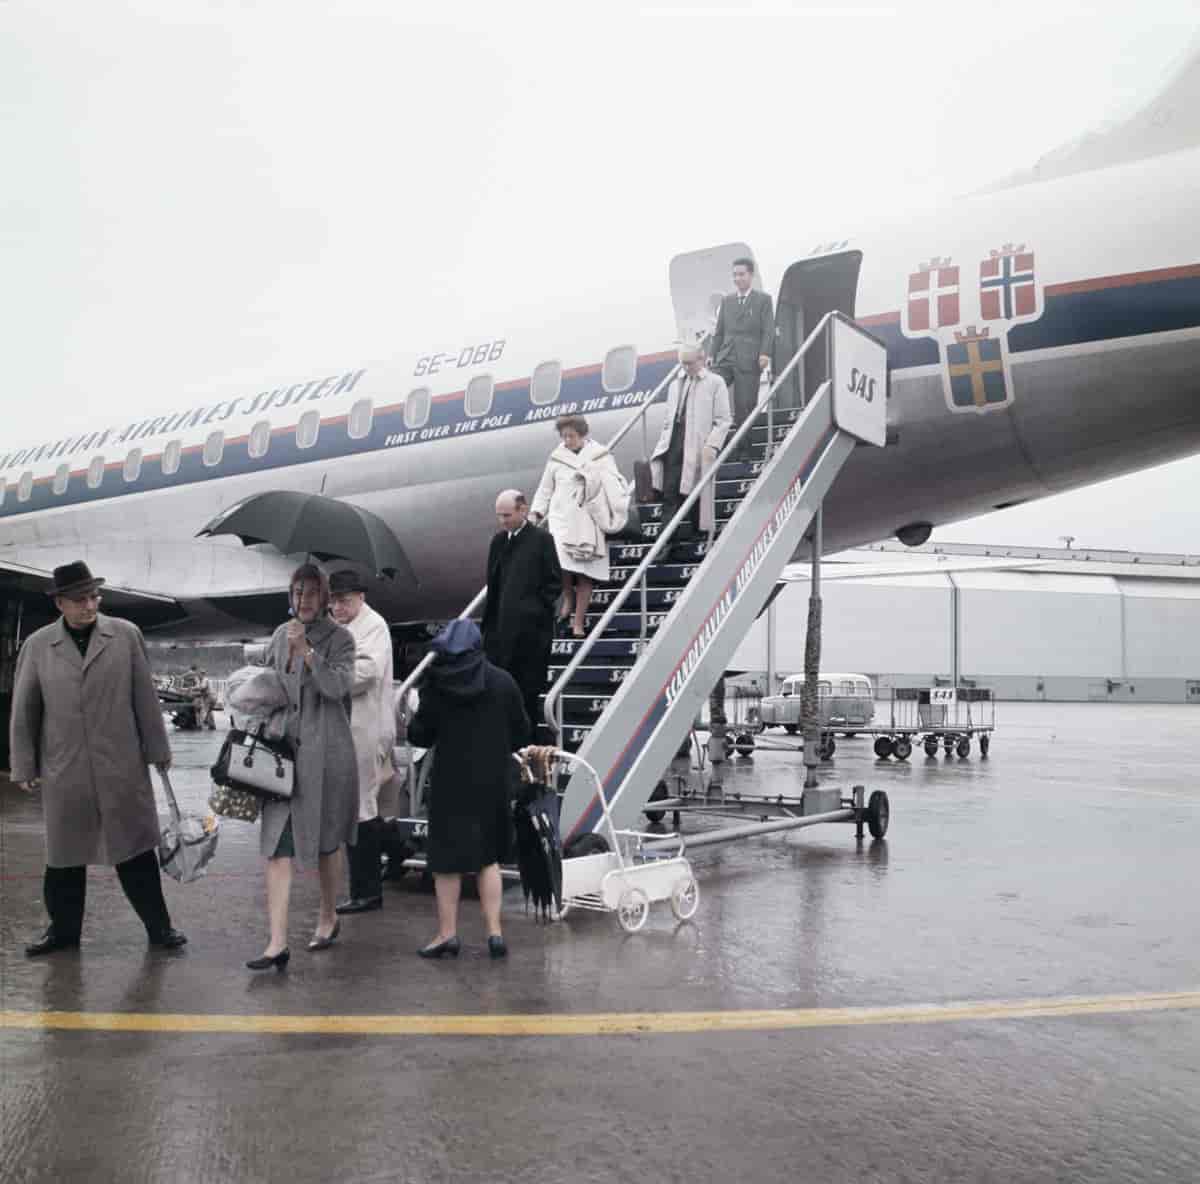 Ankomne passasjerer til Arlanda – ca. 1965